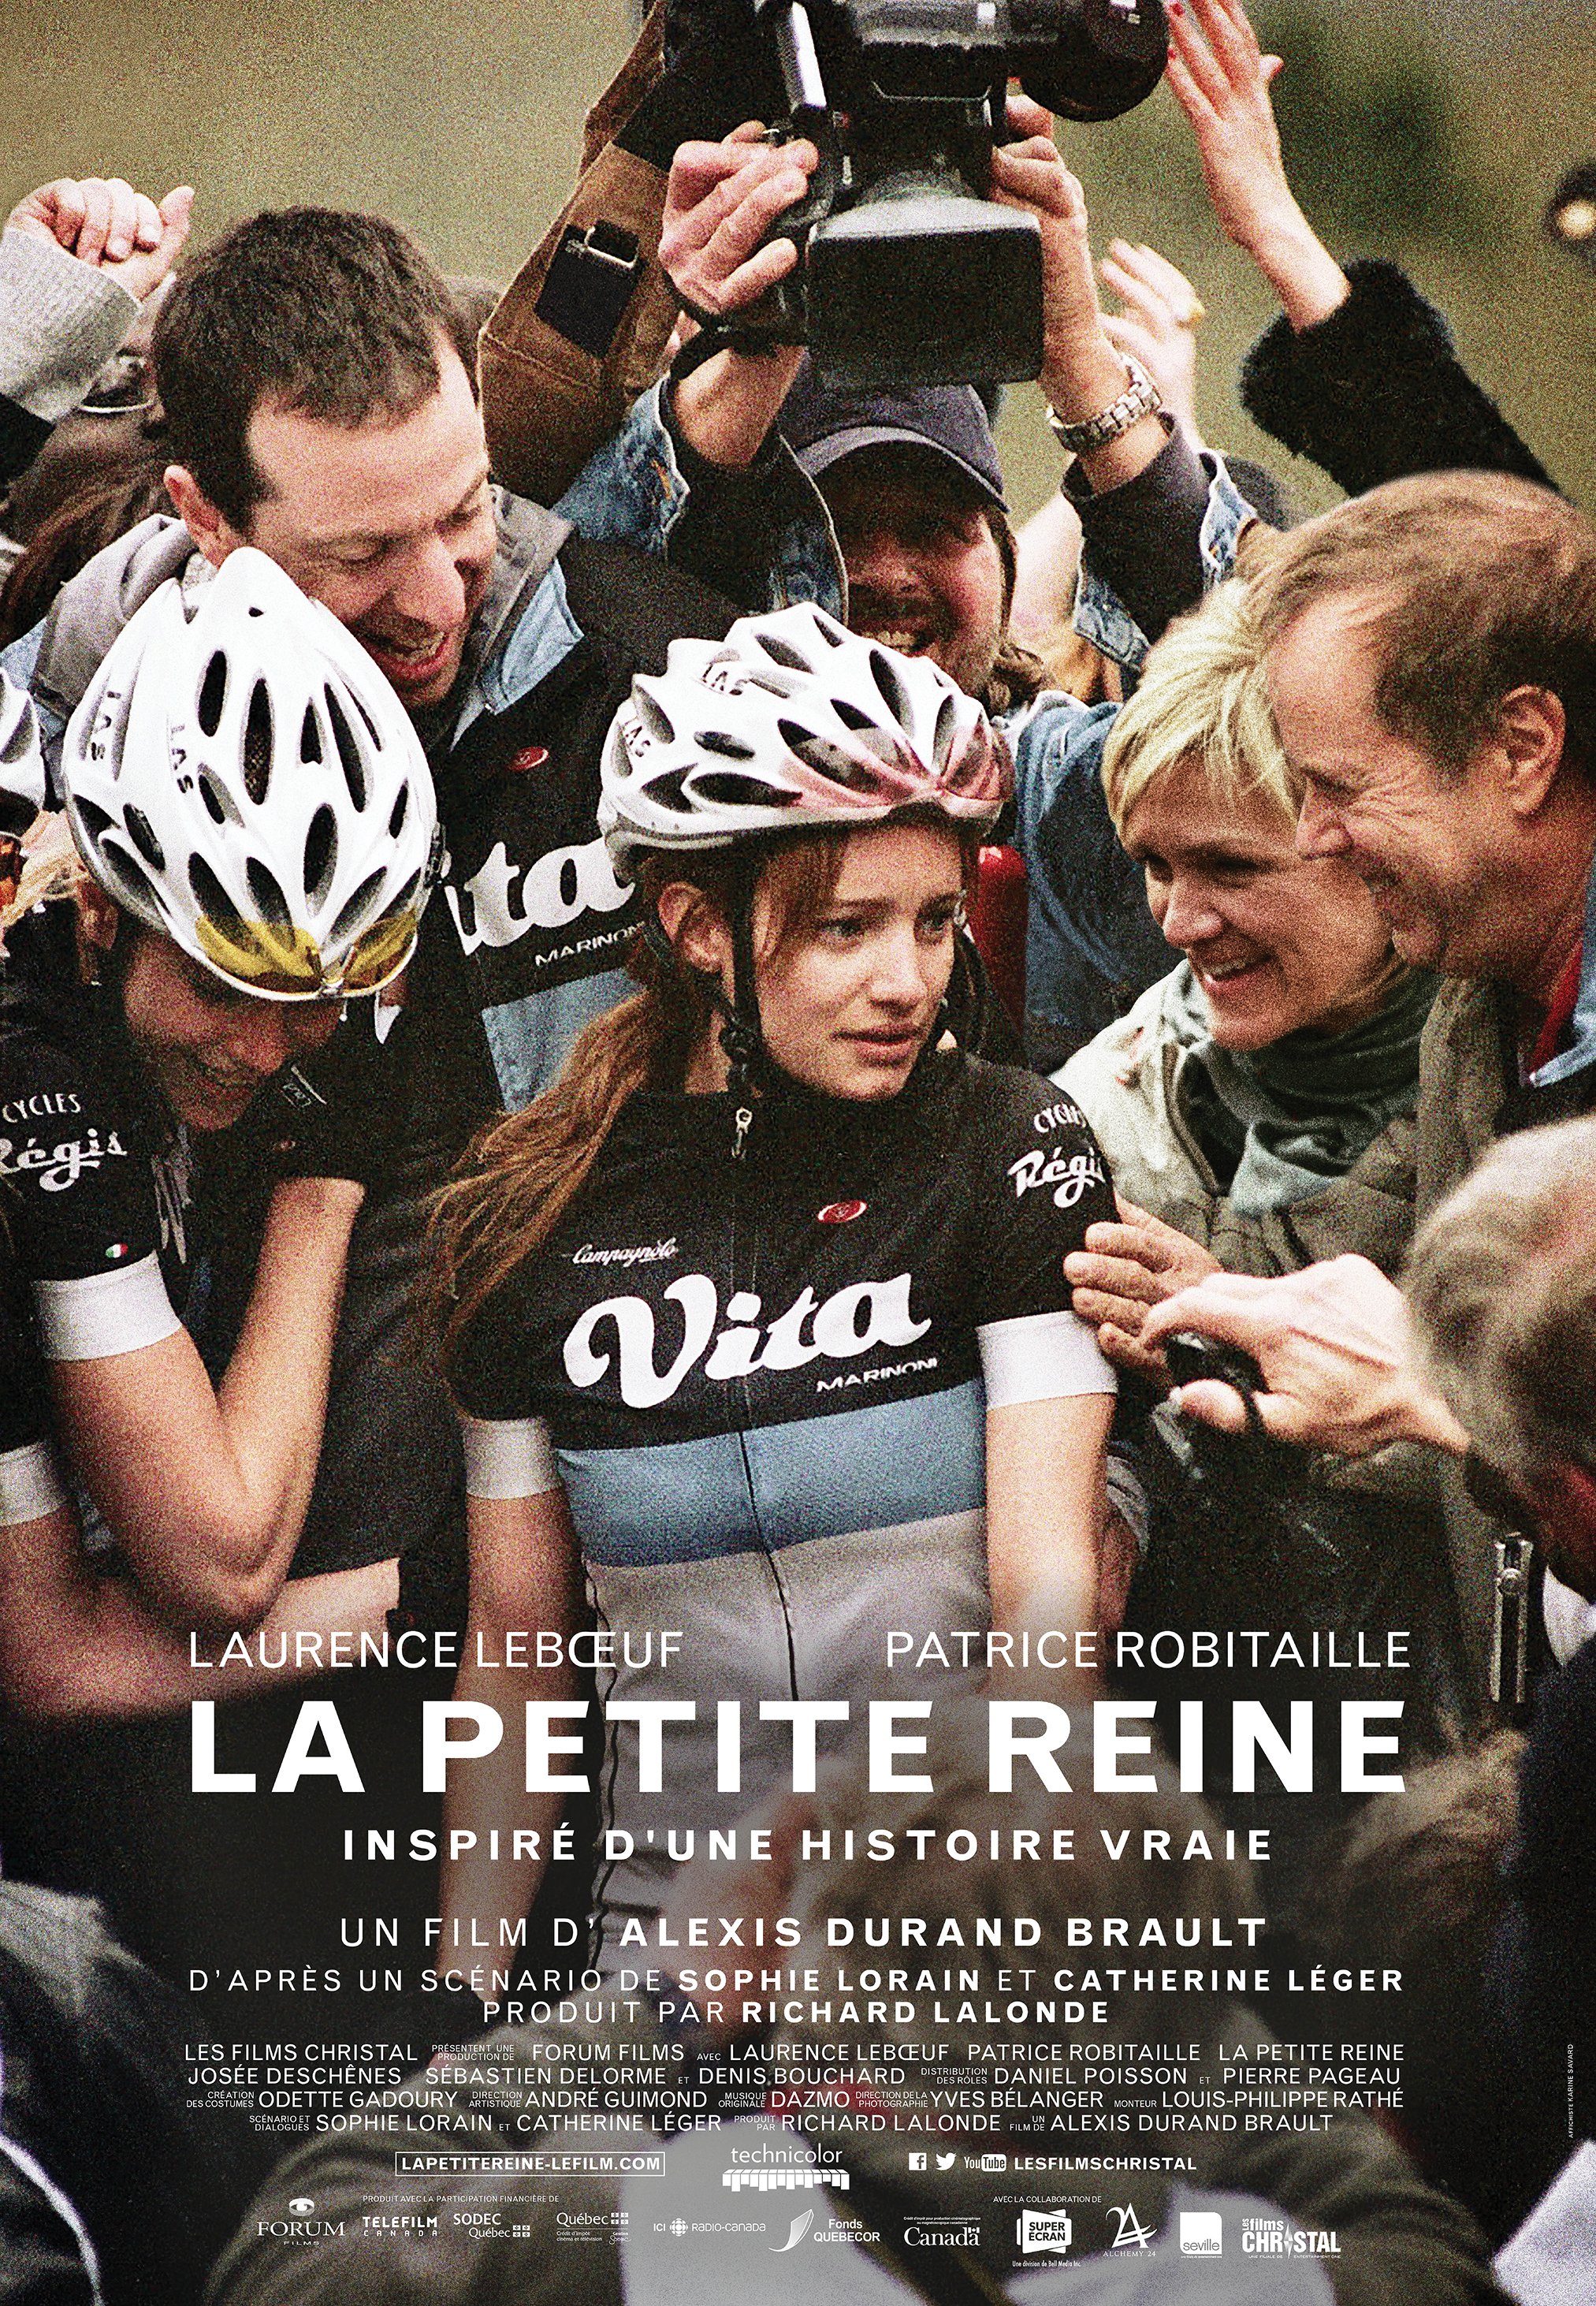 Poster of the movie La Petite reine